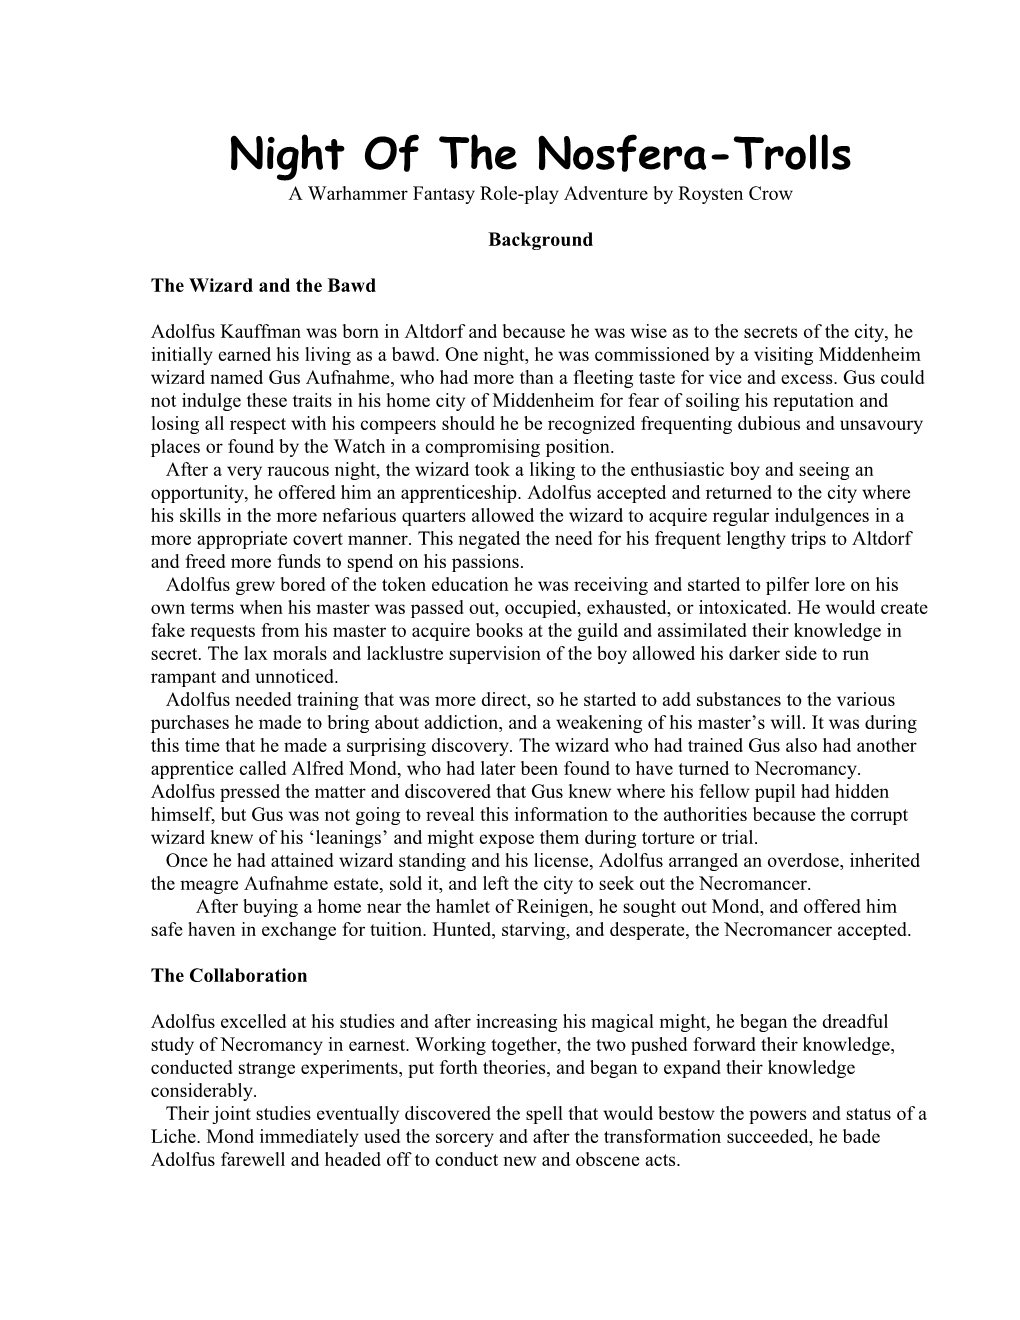 Night of the Nosfera-Trolls